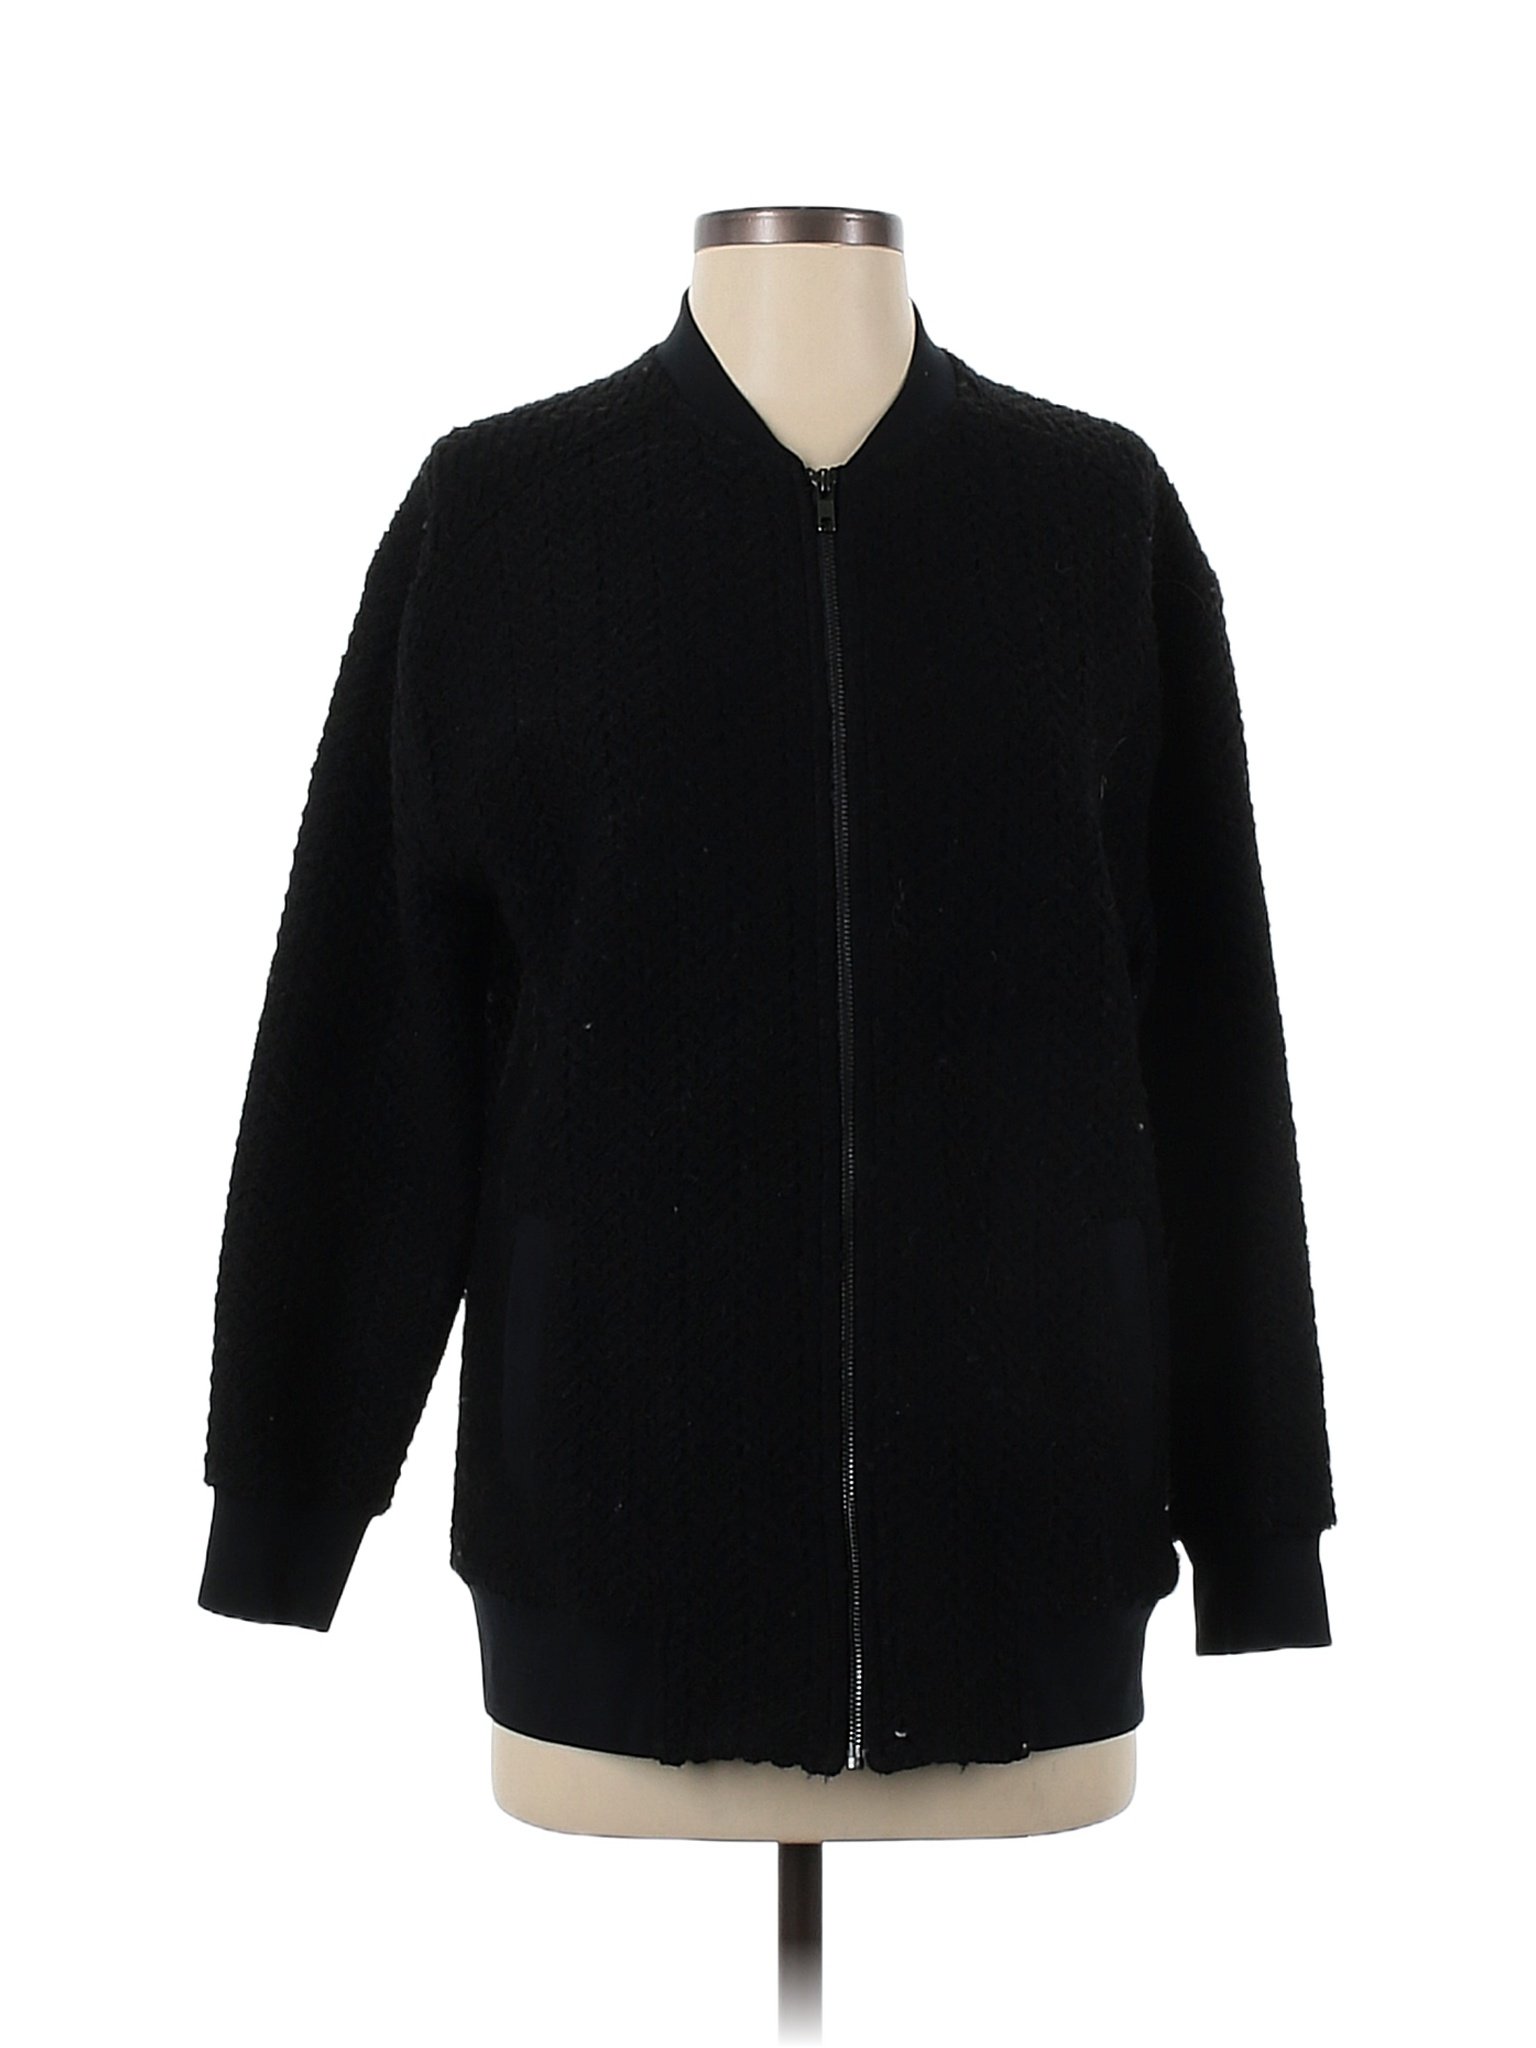 Madewell Solid Black Jacket Size S - 72% off | thredUP